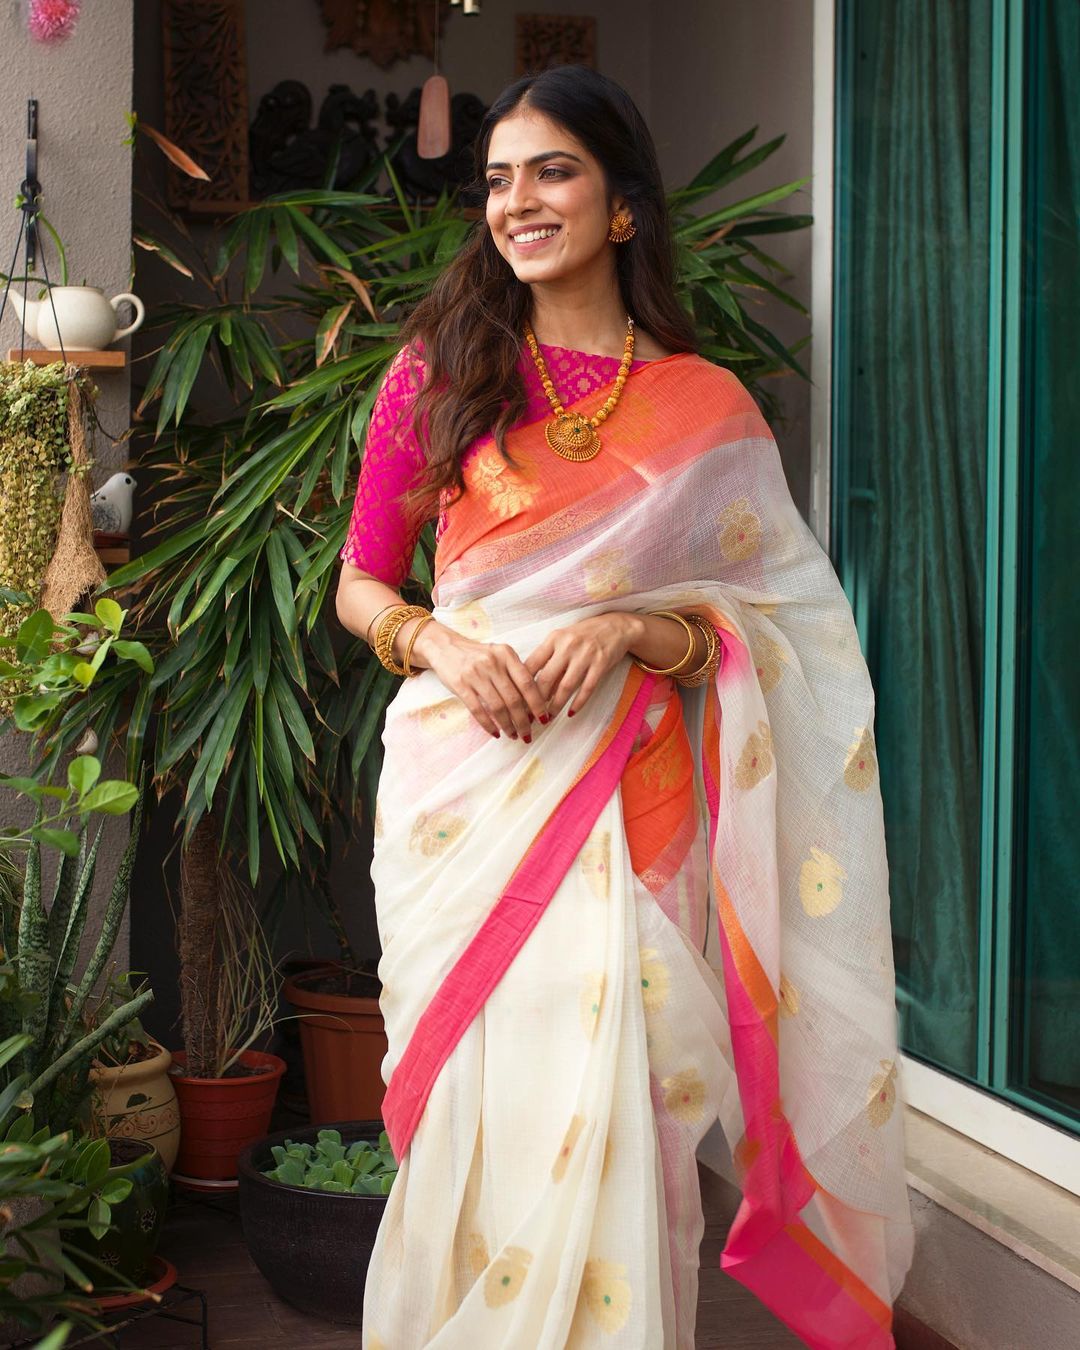 Malavika Mohanan looks graceful in the white saree.